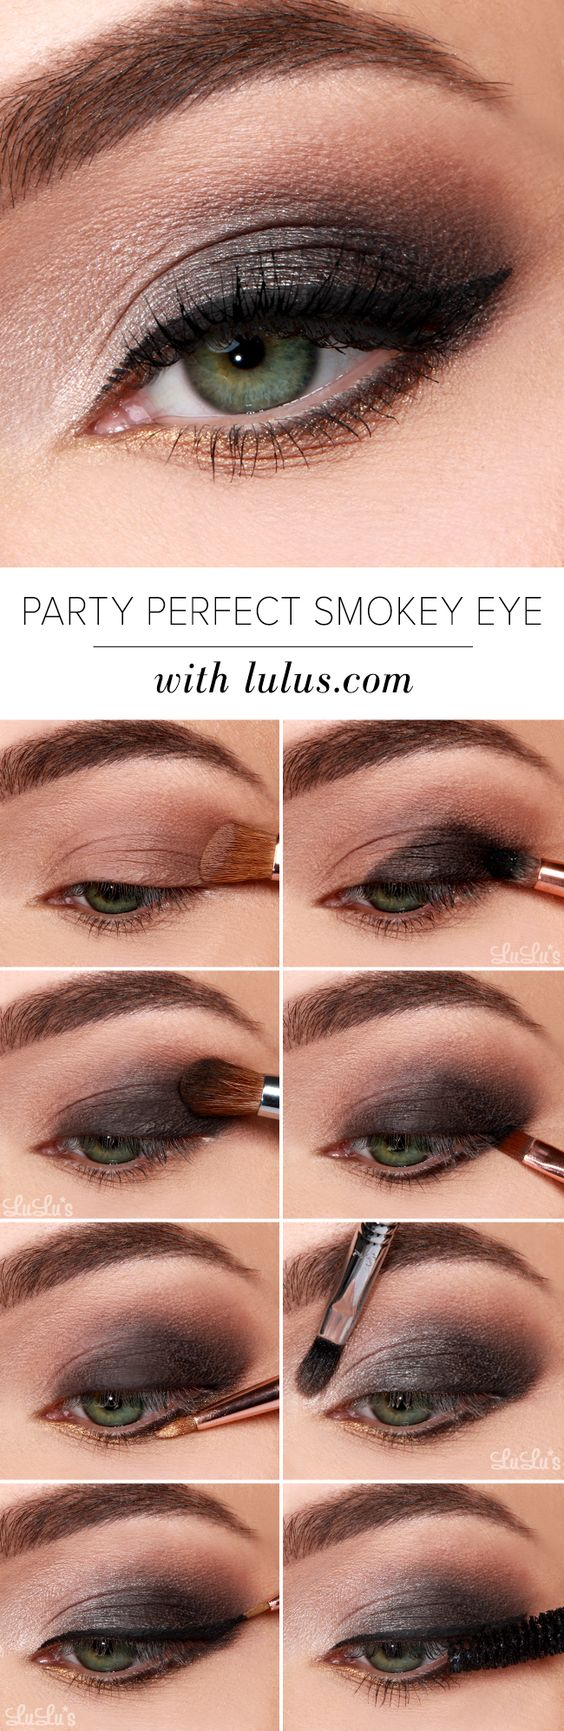 Daytime Eye Makeup 40 Hottest Smokey Eye Makeup Ideas 2019 Smokey Eye Tutorials For